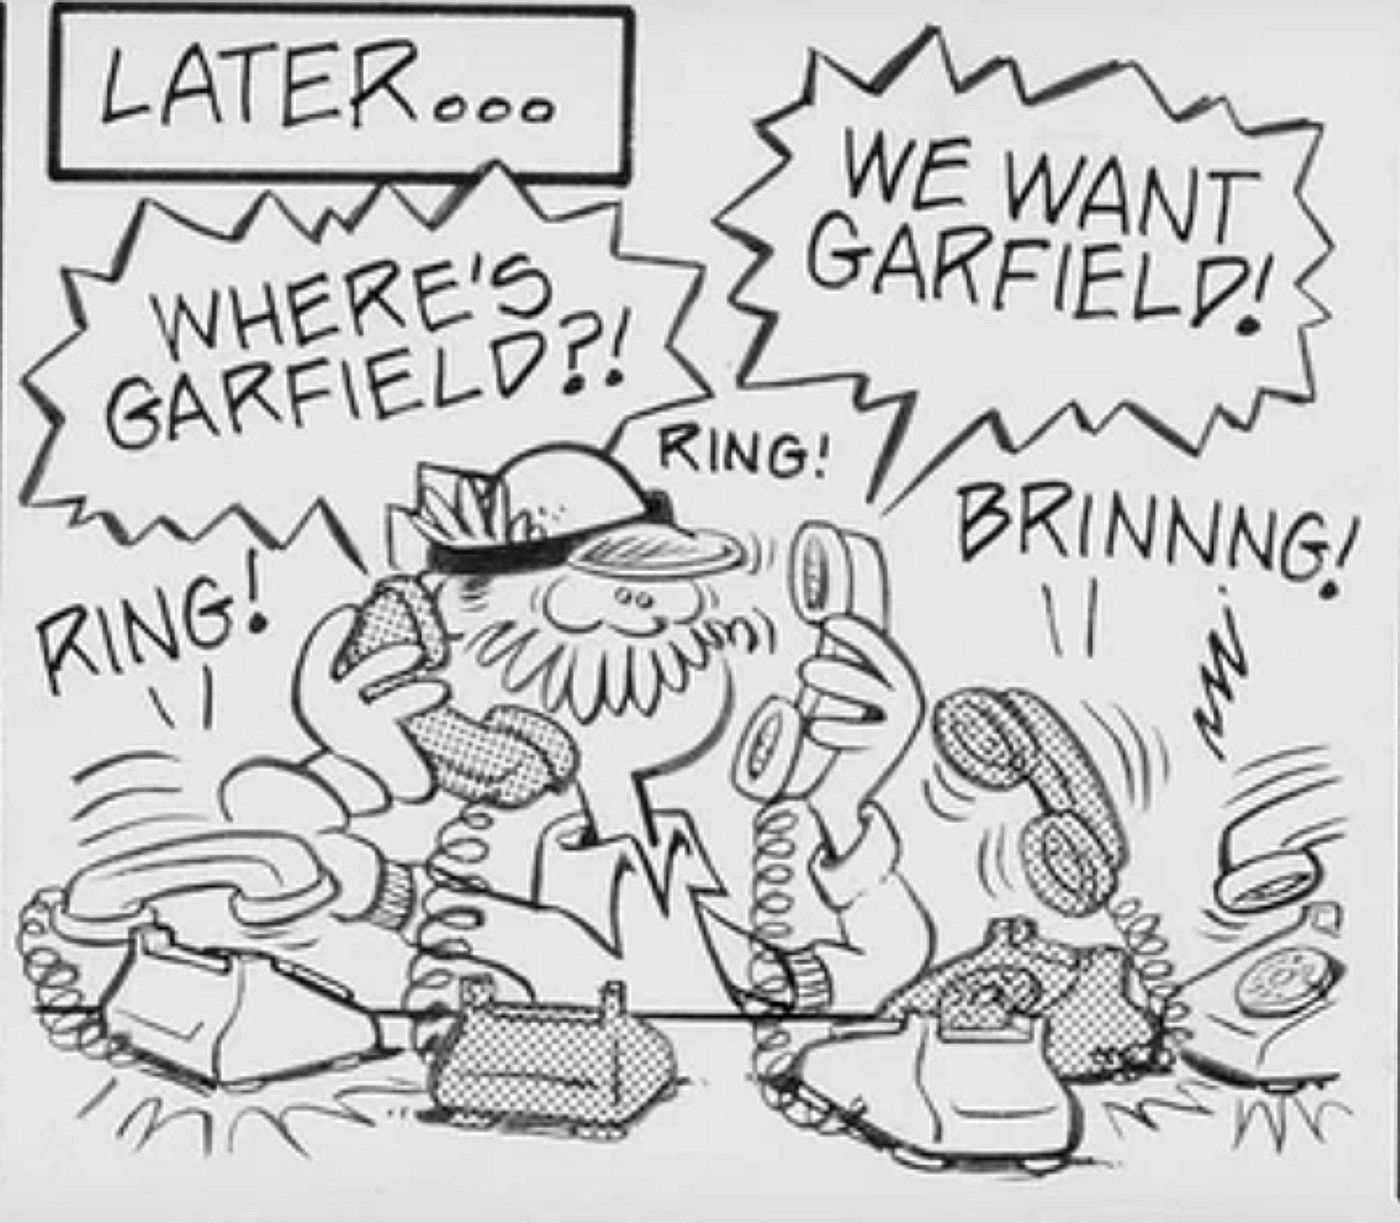 The Chicago Sun Times receives numerous calls demanding Garfield's return